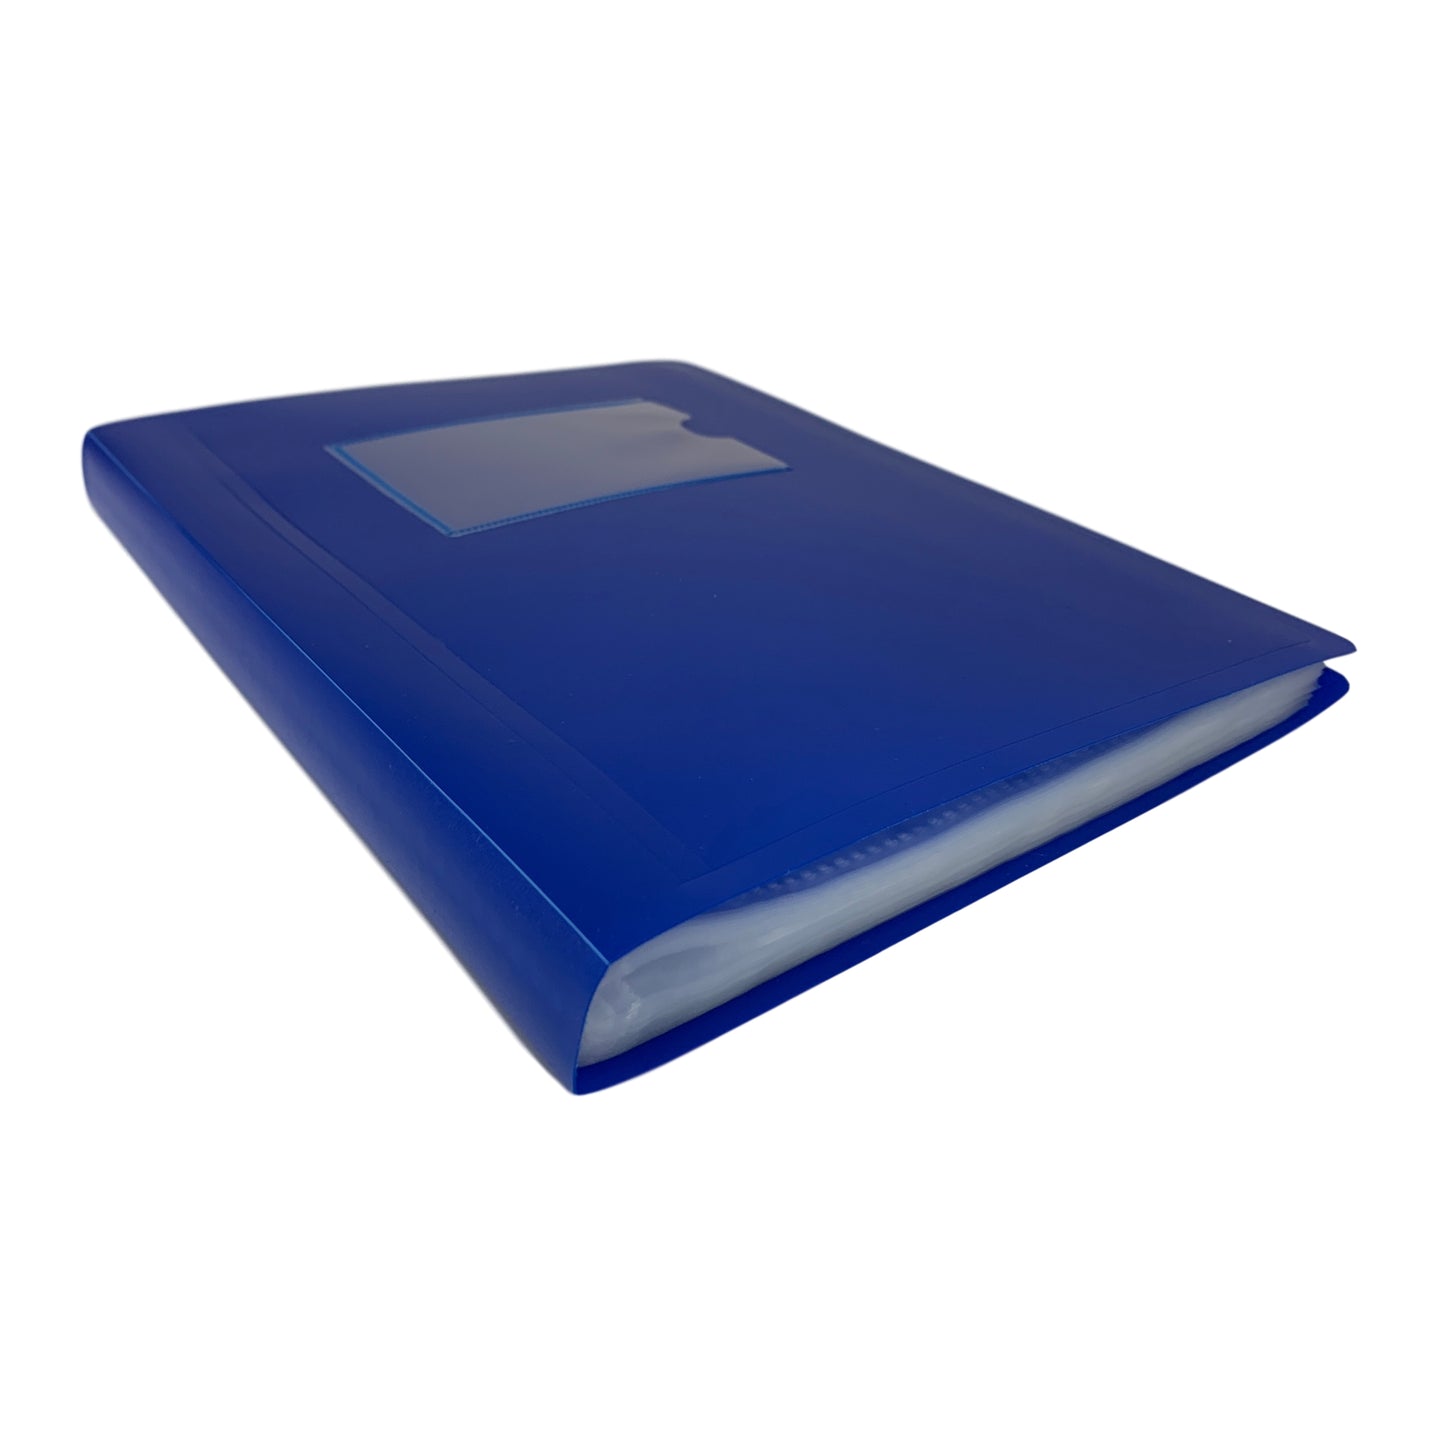 A5 Blue Flexible Cover 100 Pocket Display Book